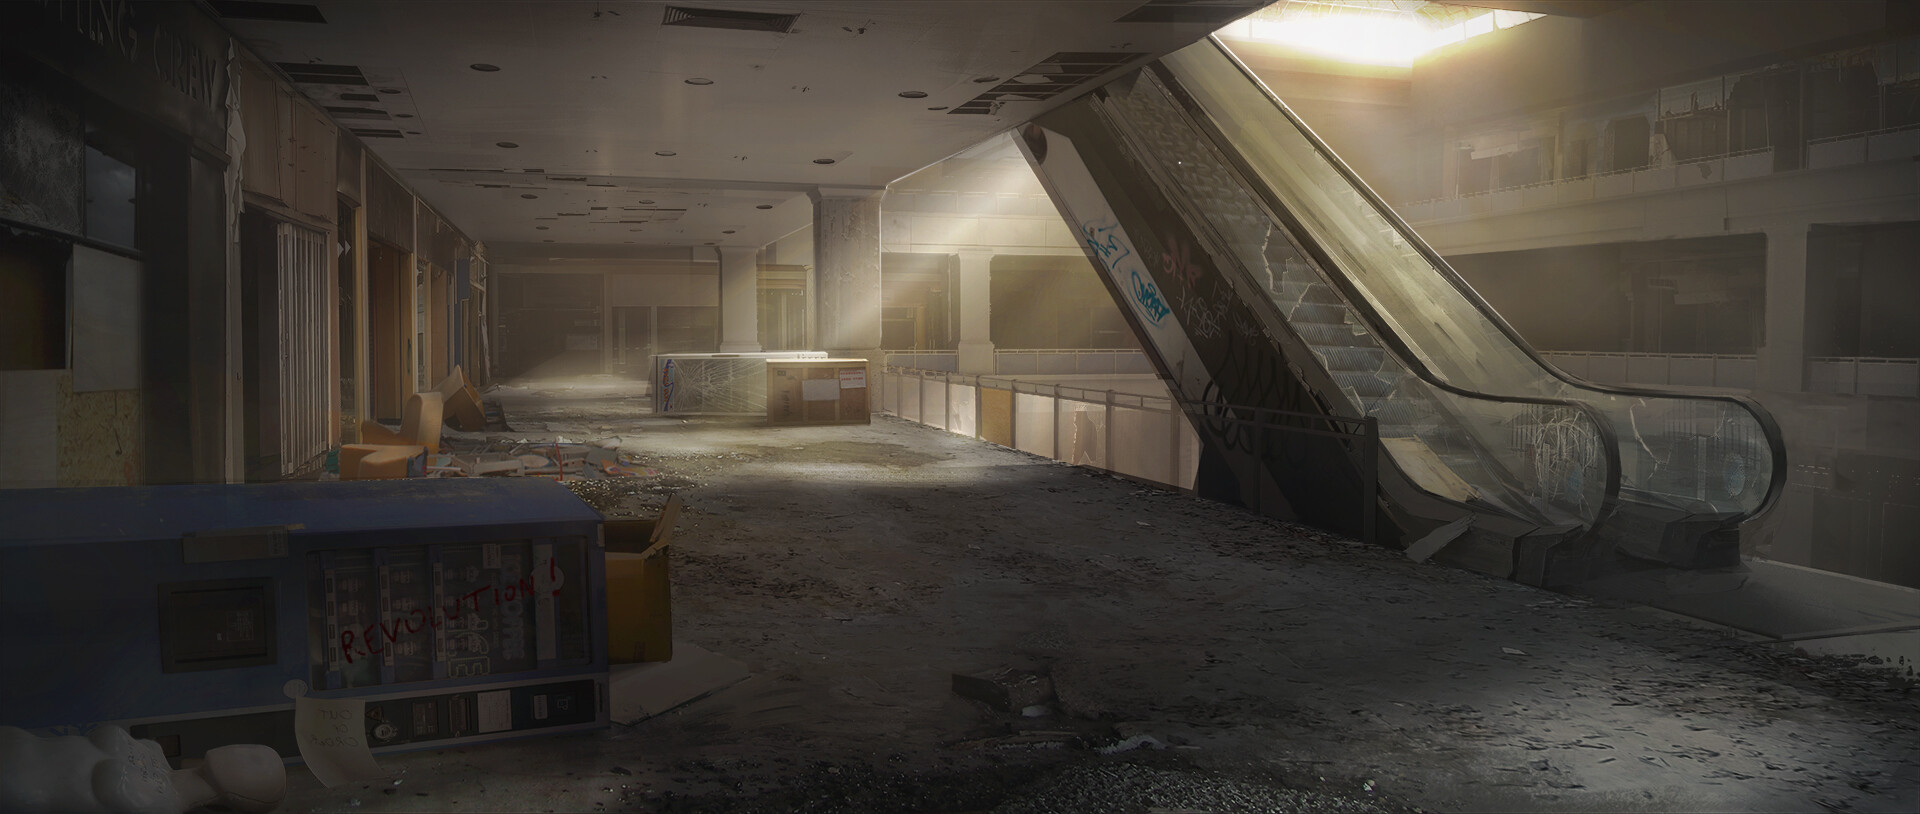 Abandonded mall photo